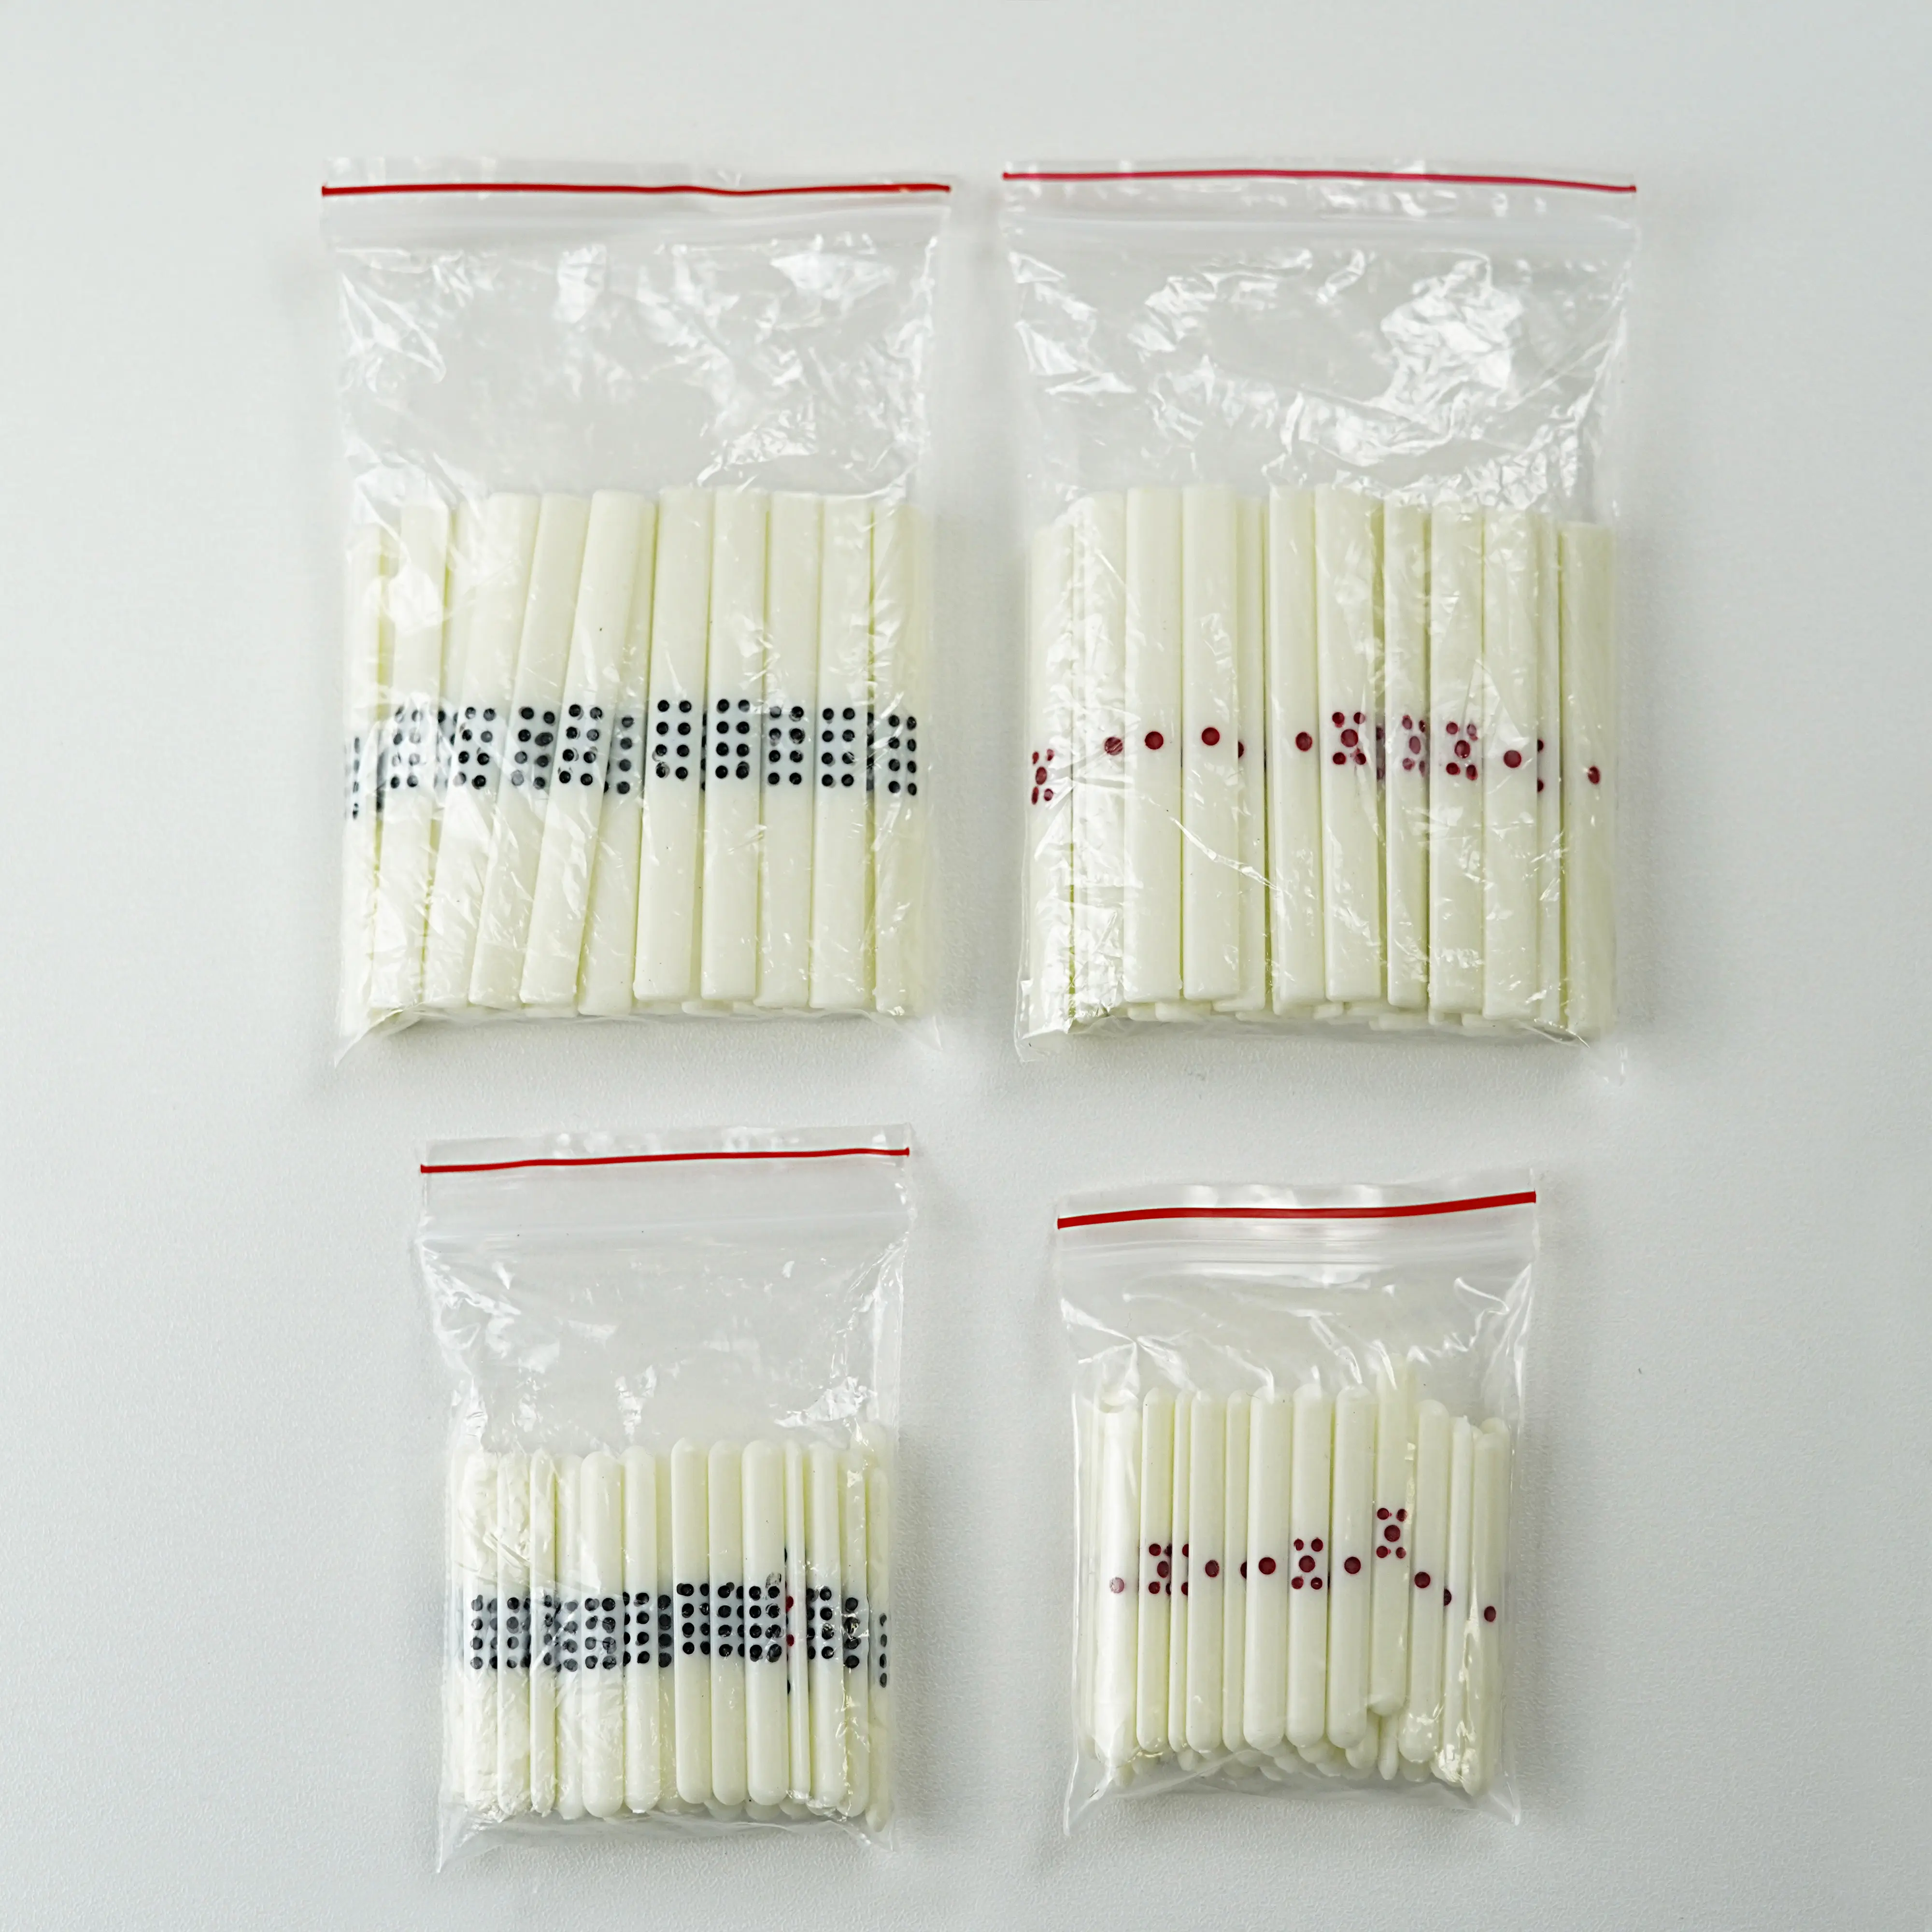 Japanese mahjong Poker chips Mah Jong Counting Sticks Mahjong Scoring/Betting Sticks (Ivory) - Set of 88